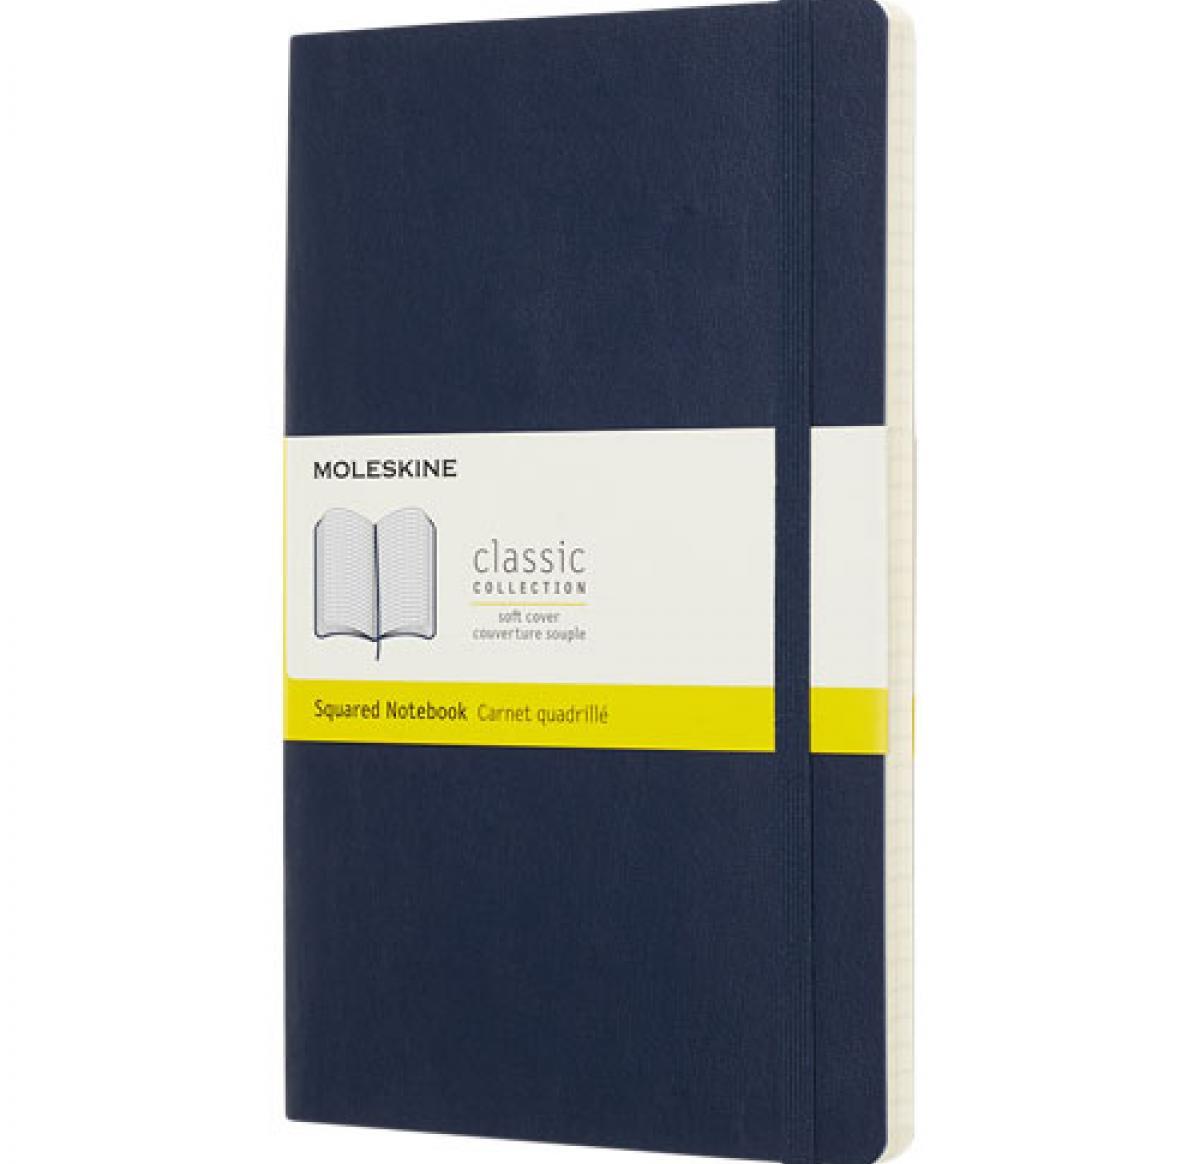 Printed Moleskine Classic L Soft Cover Notebooks - Squared